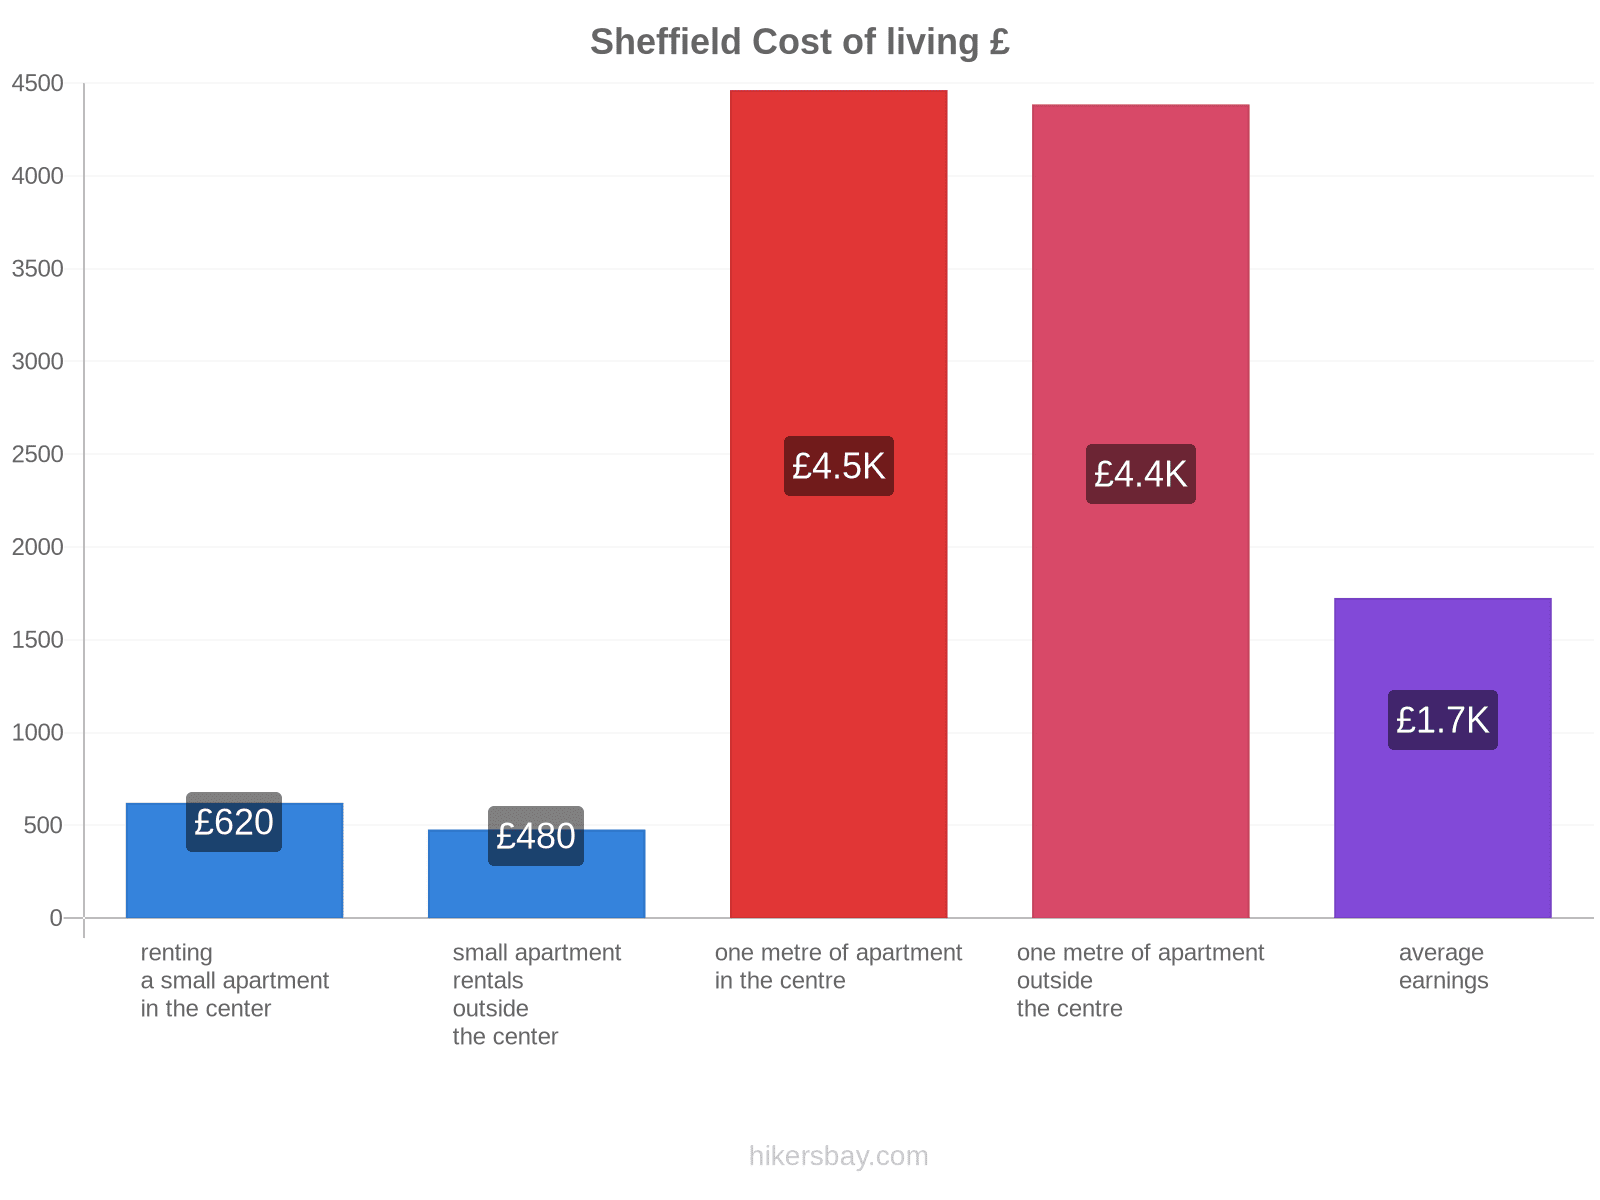 Sheffield cost of living hikersbay.com